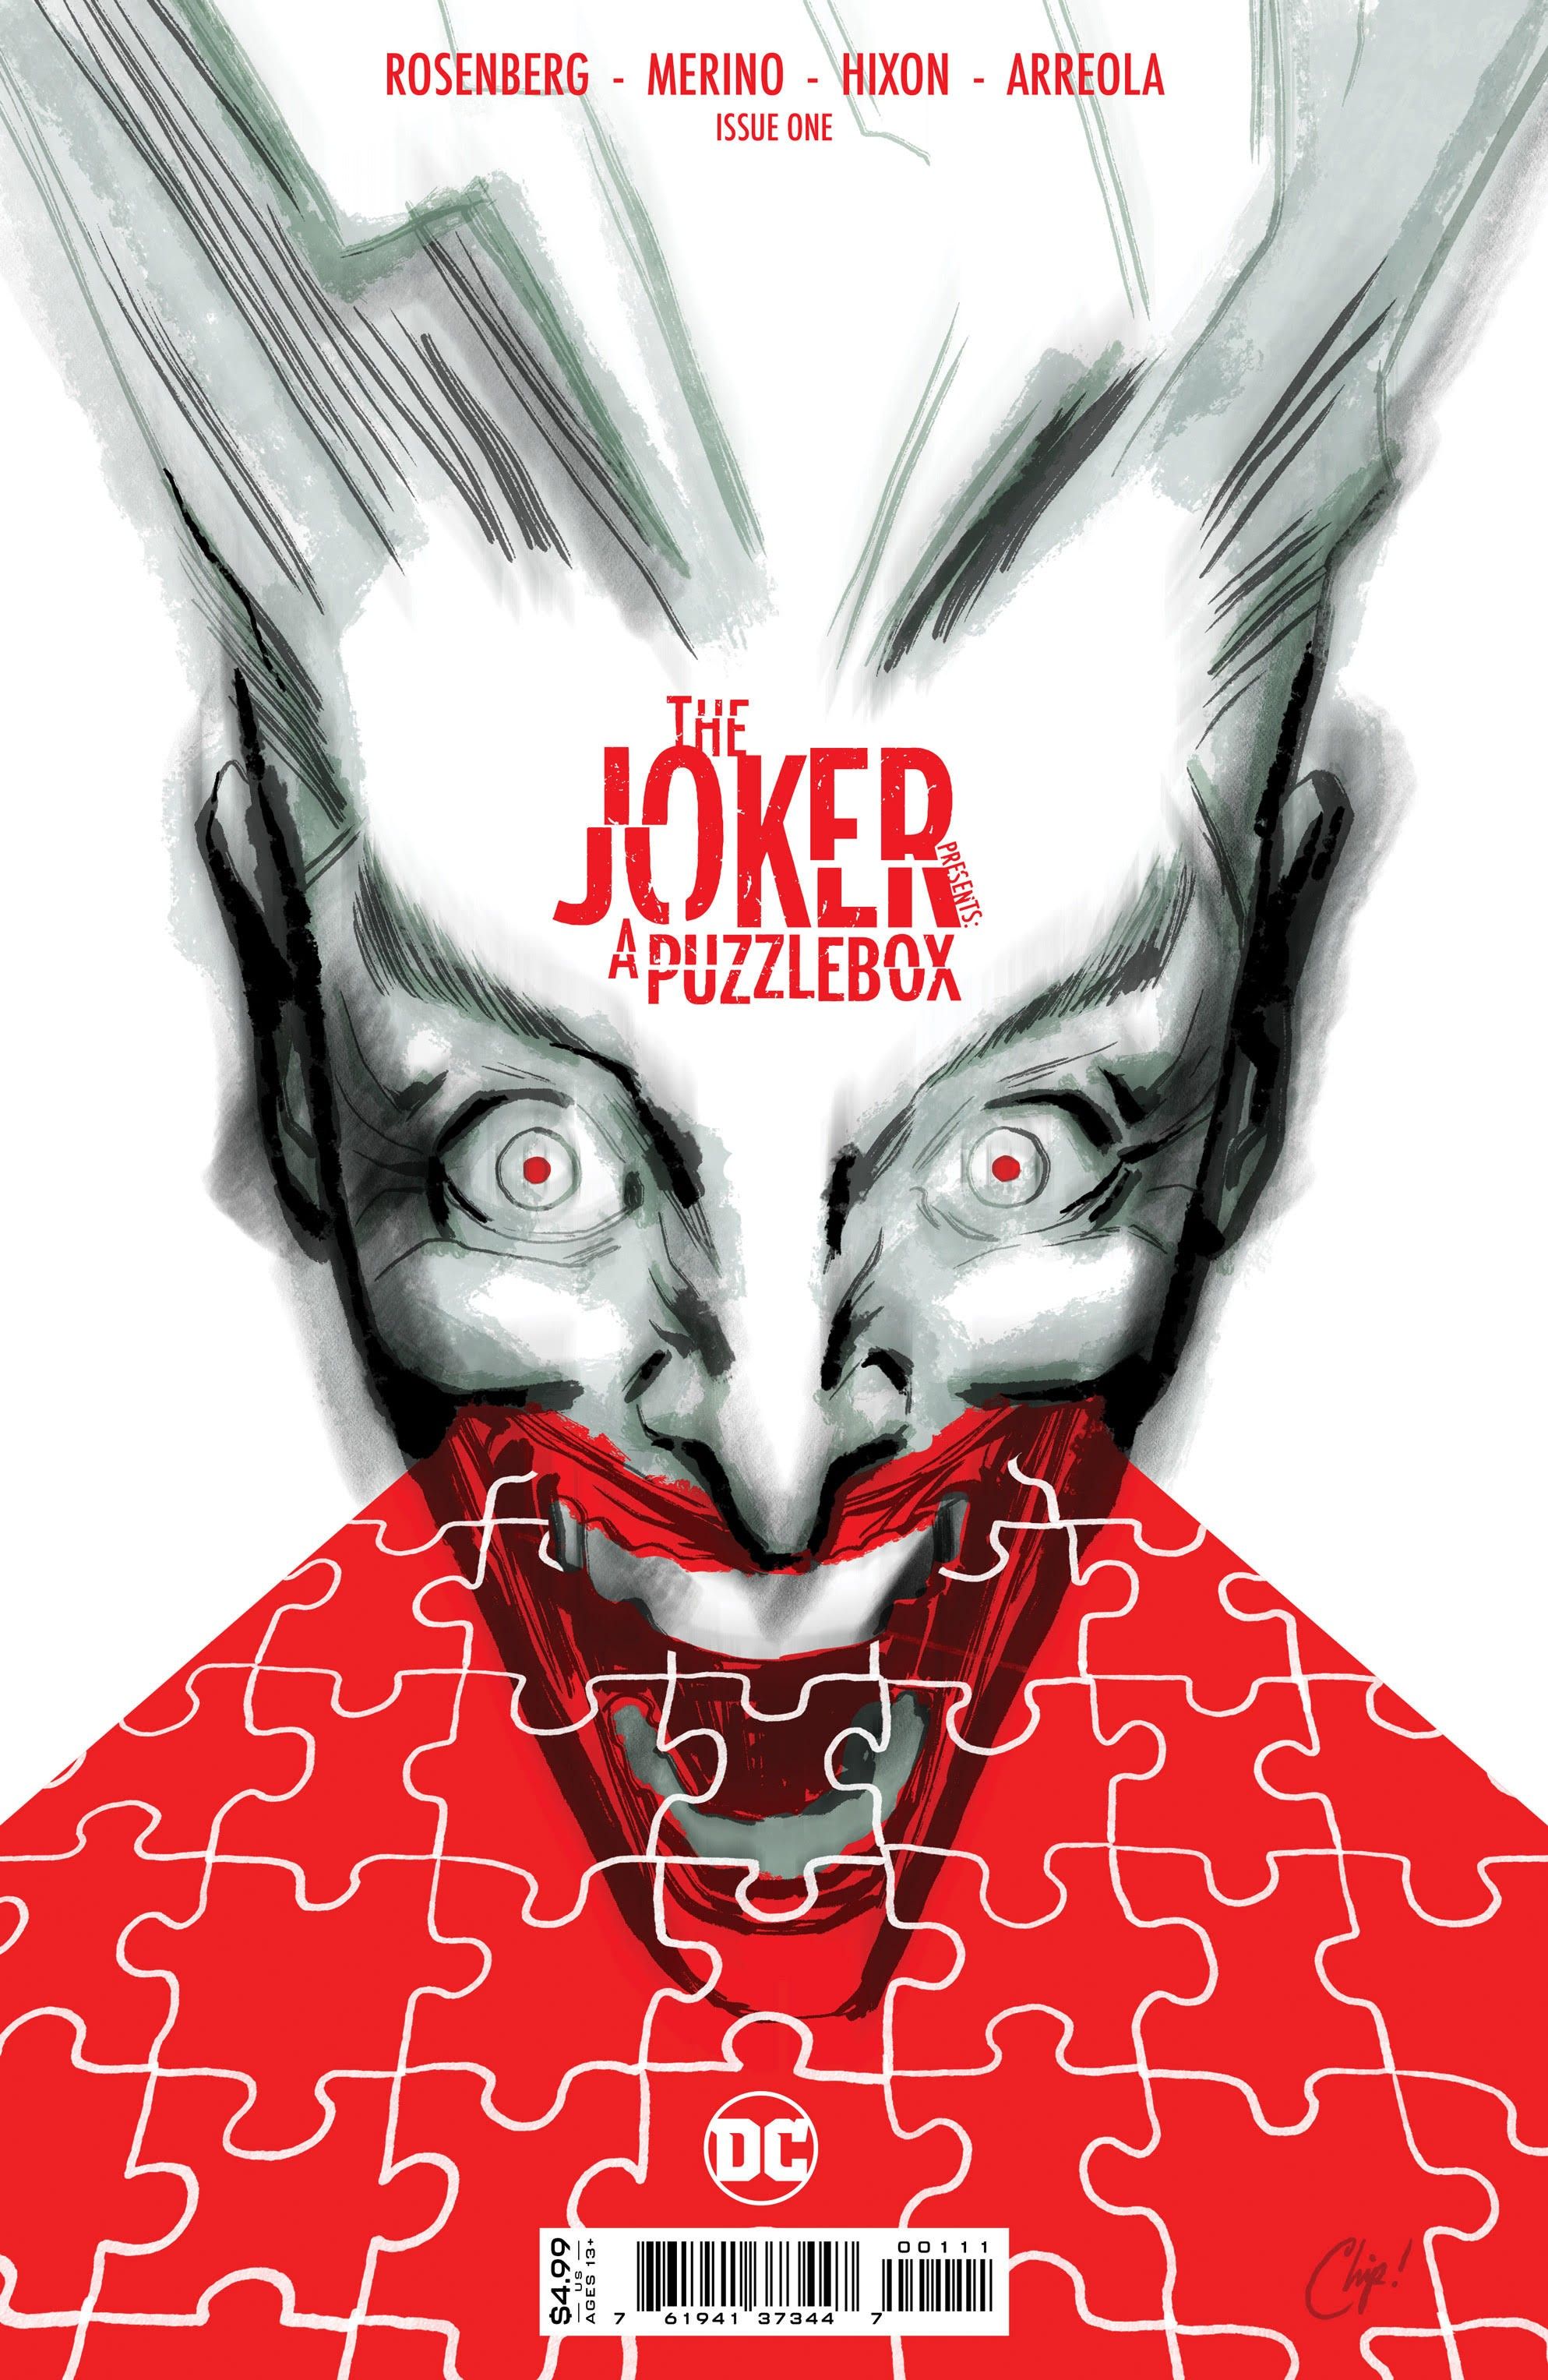 The Joker A Puzzlebox Cover Art